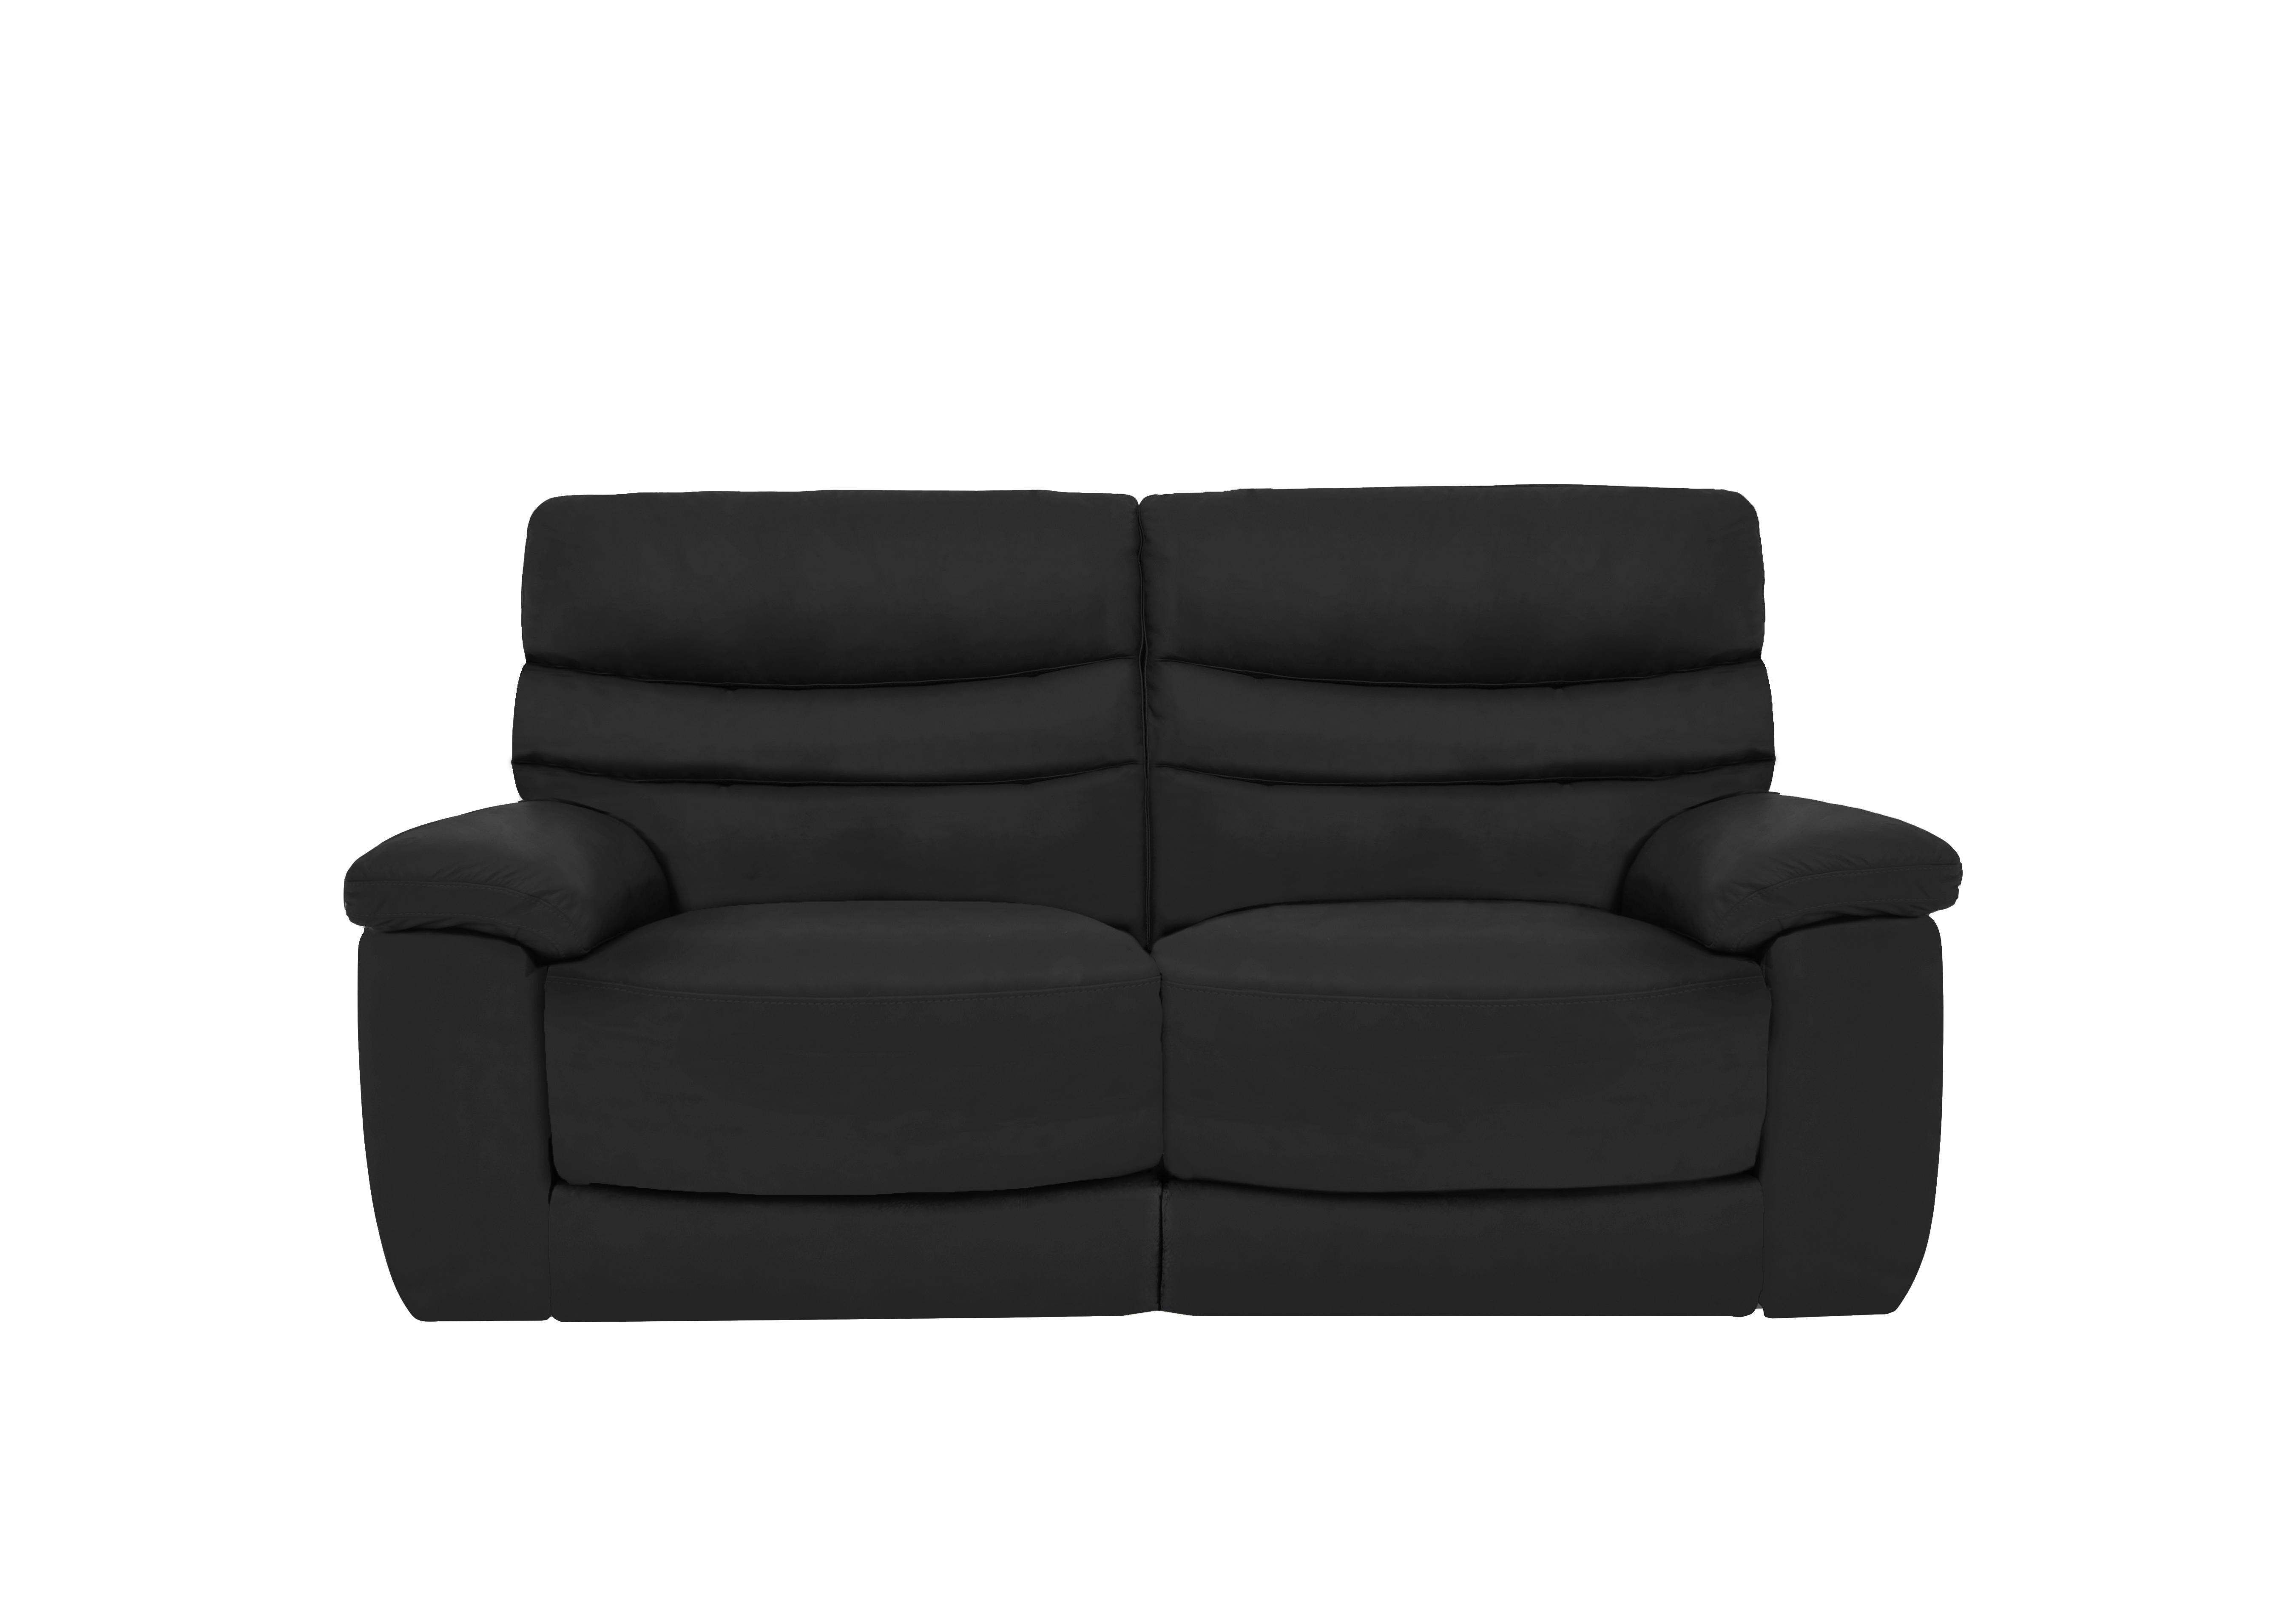 Nimbus 2 Seater Leather Sofa in Bx-023c Black on Furniture Village